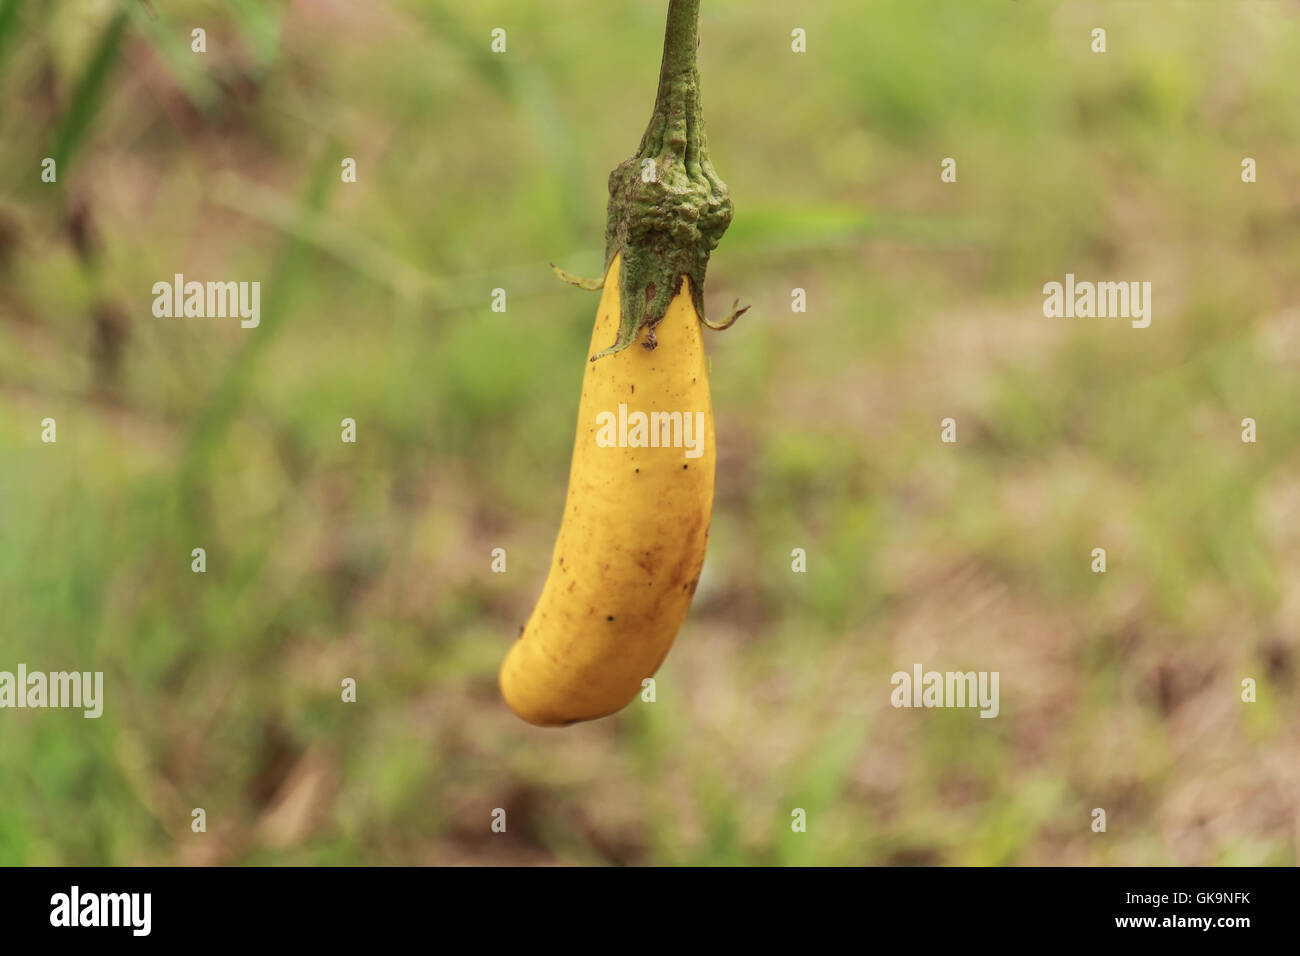 Yellow eggplant focus on results Stock Photo